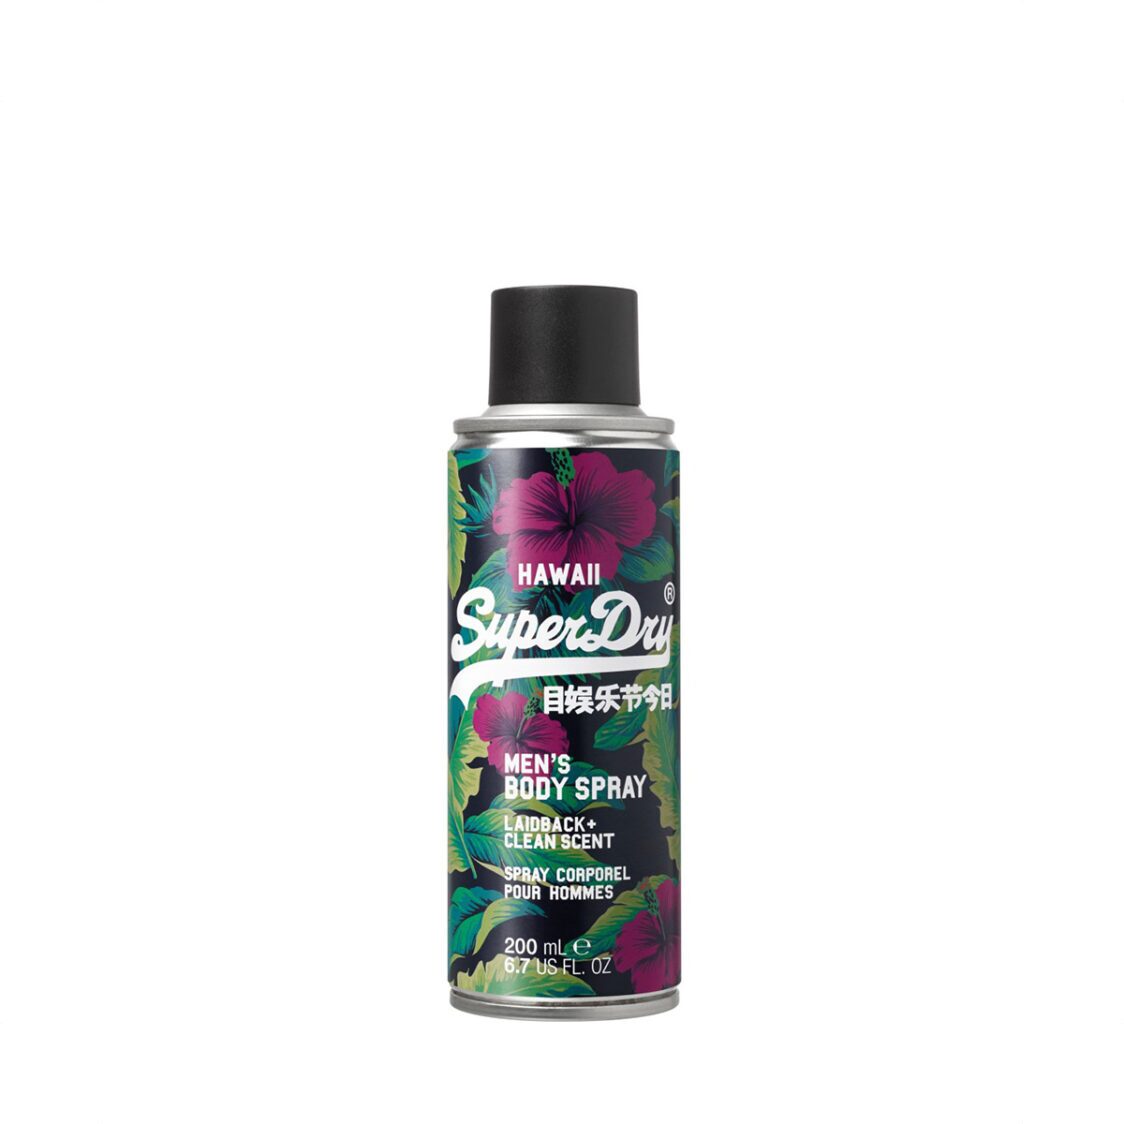 SuperDry Body Spray Hawaii 200ml